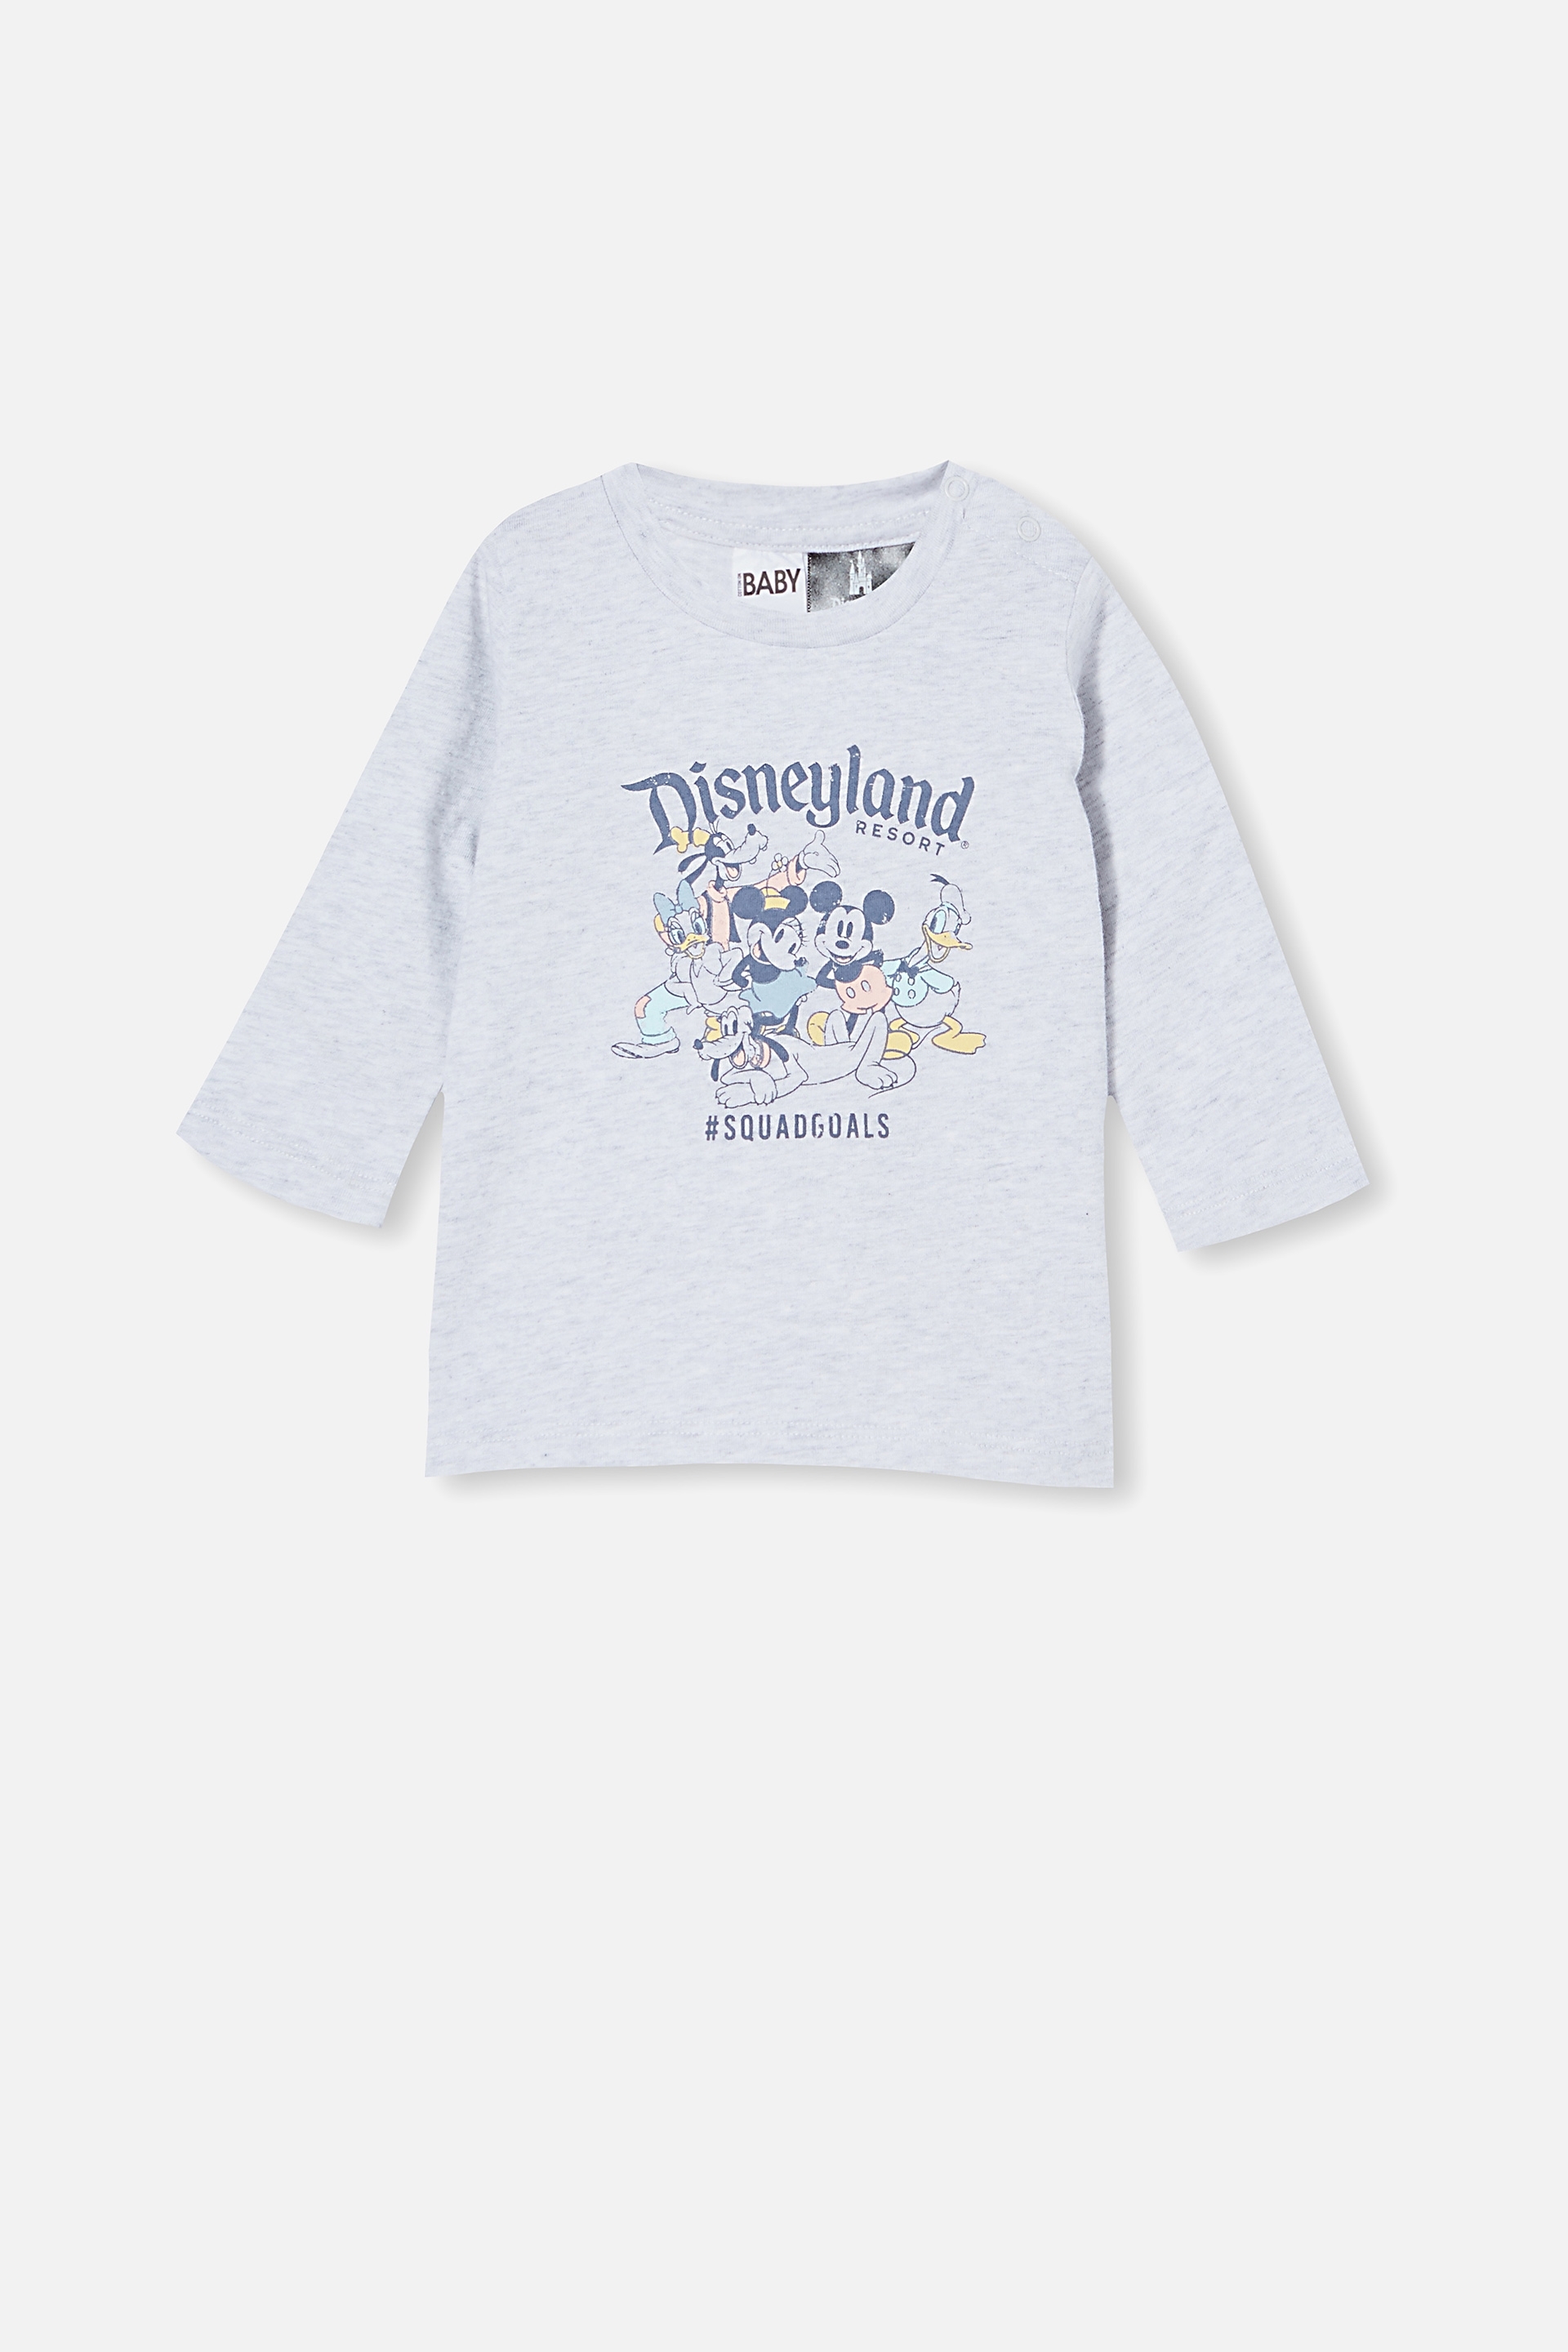 Cotton On Kids - Disneyland Jamie Long Sleeve Tee - Lcn dis cloud marle/squad goals